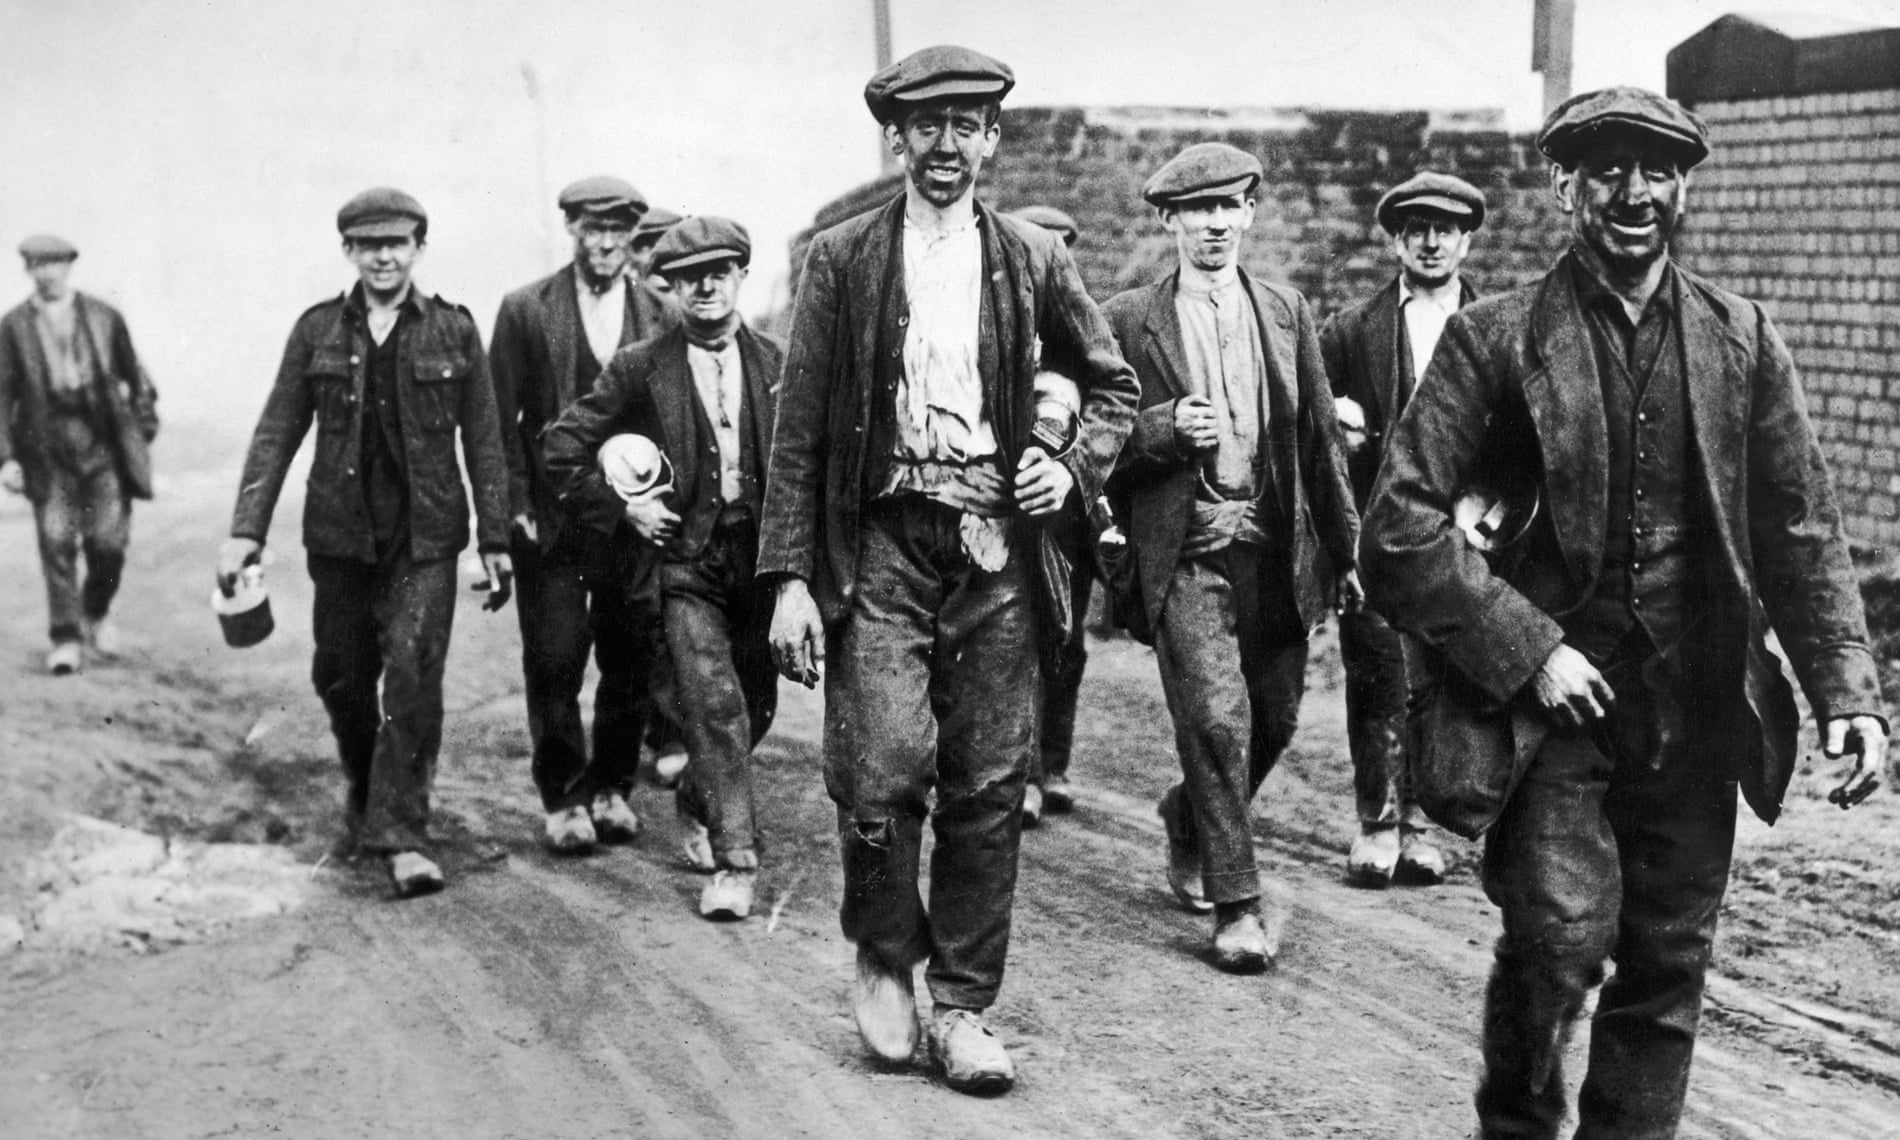 English coal miners walk home from work, circa 1925.